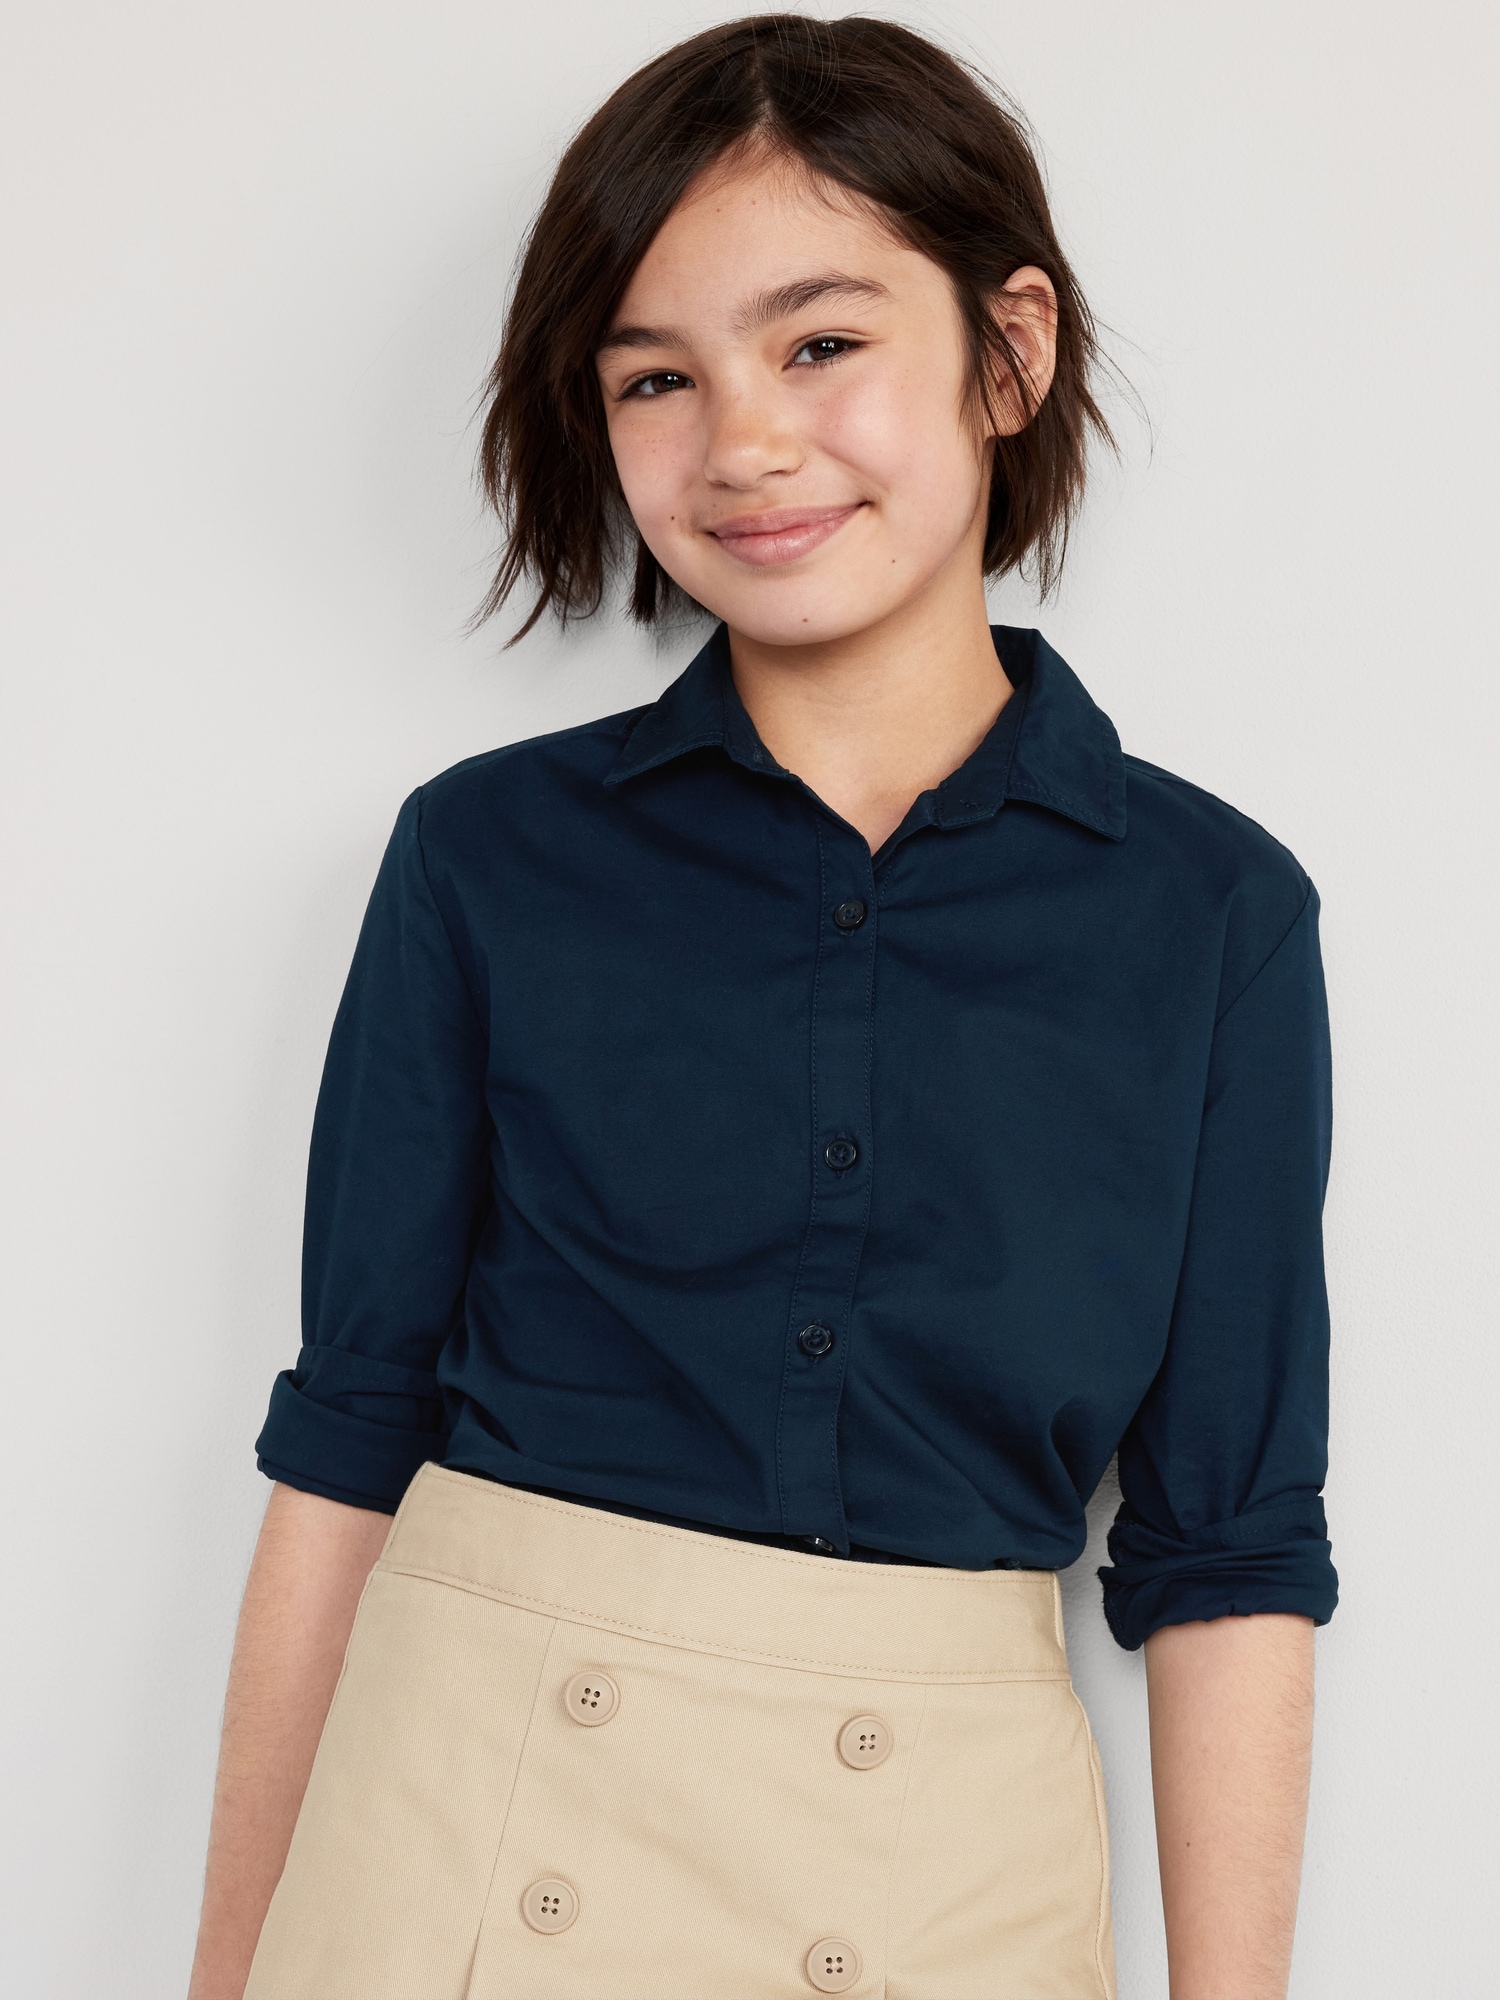 School Uniform Long-Sleeve Shirt for Girls | Old Navy